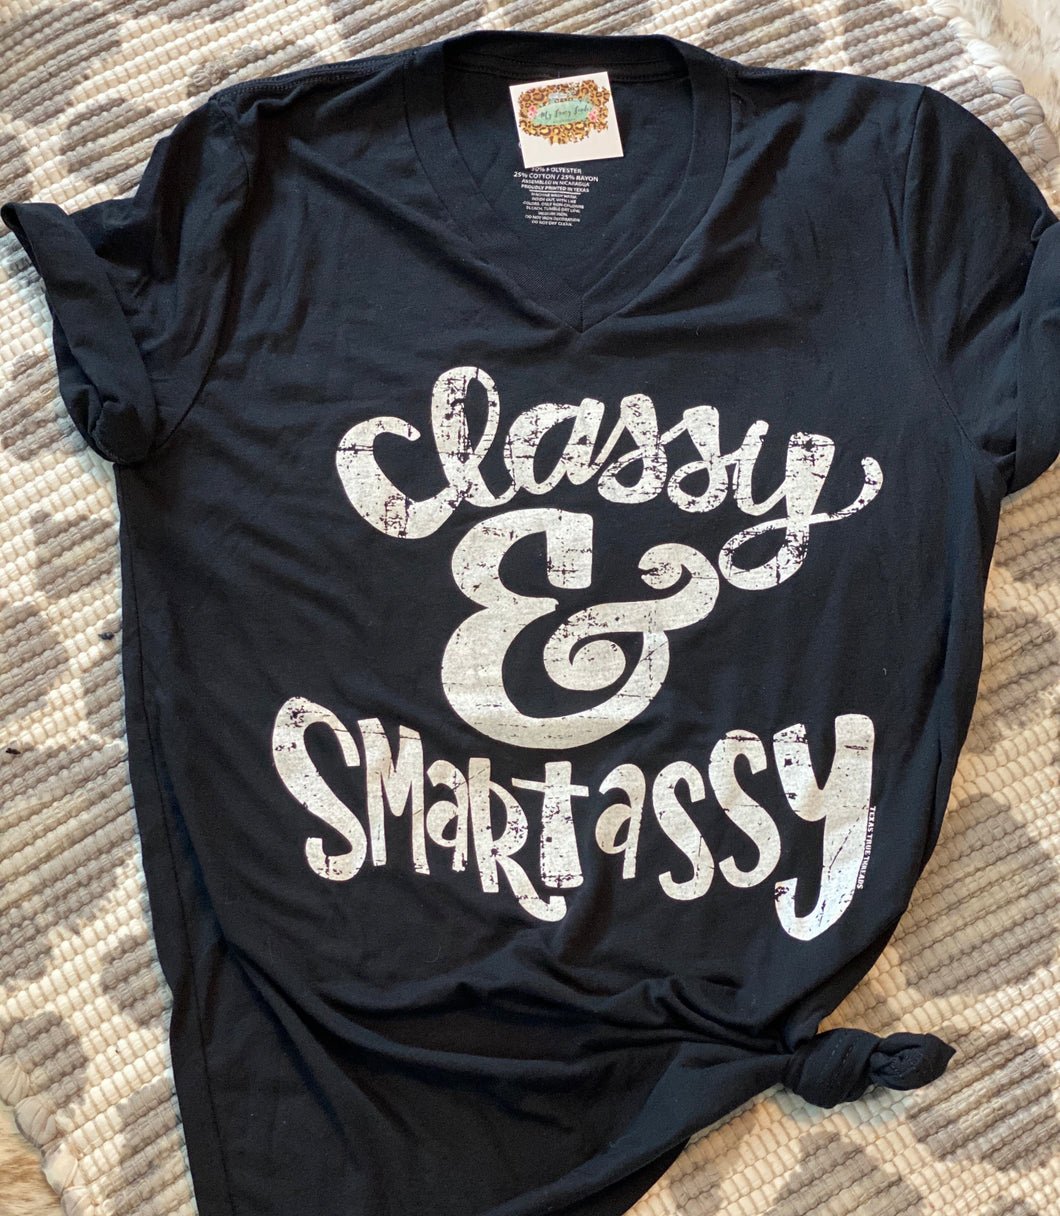 Classy & Smartassy Graphic T-Shirt